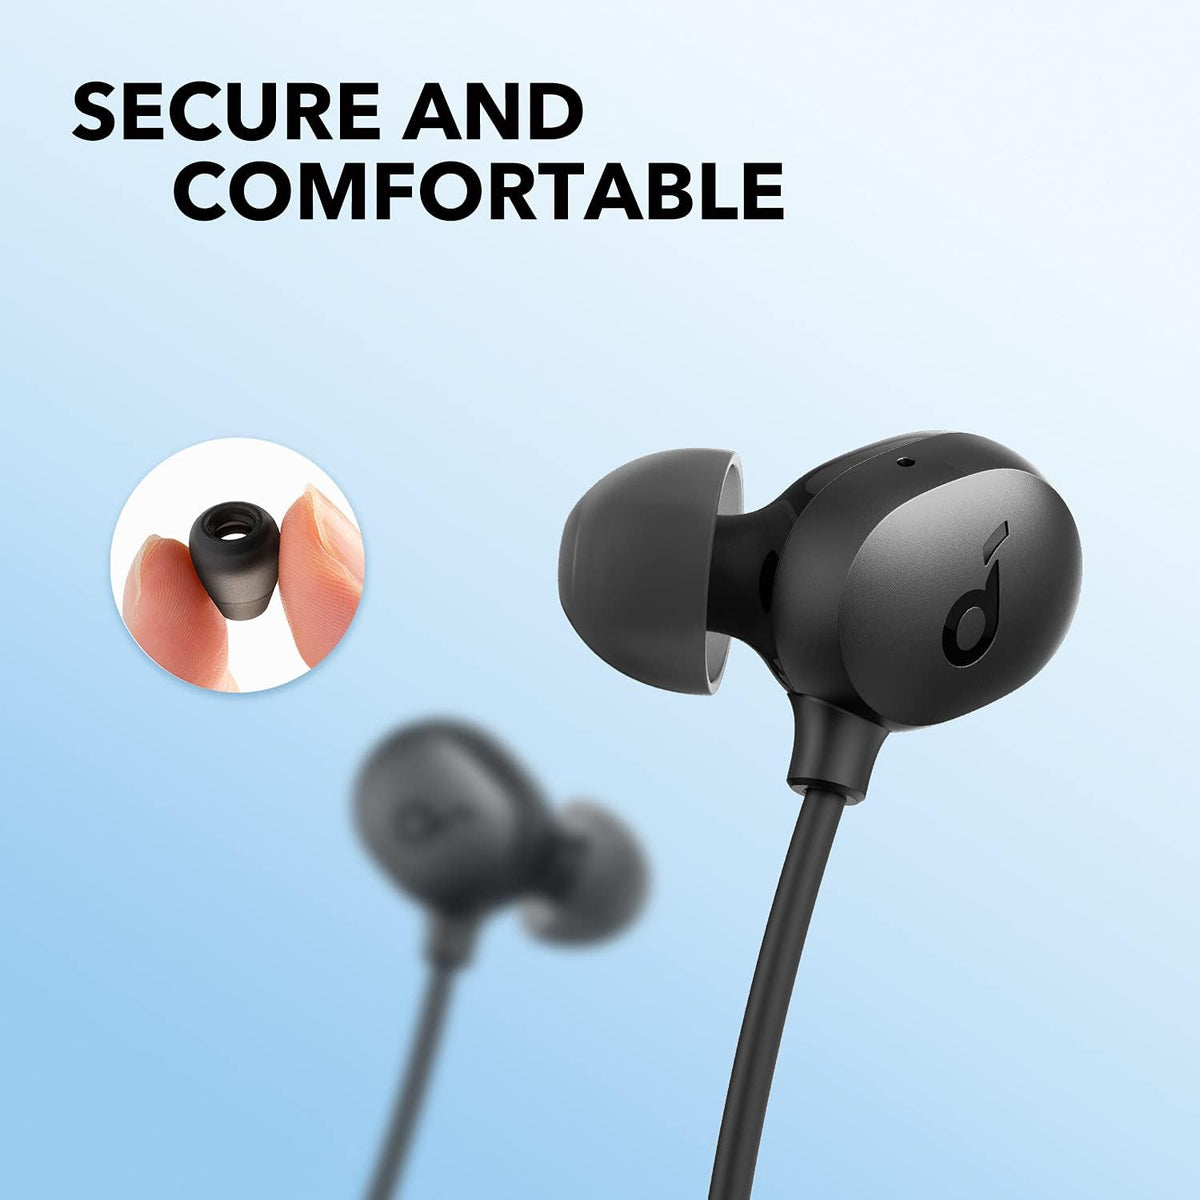 Soundcore by Anker - Life U2i Wireless Neckband Headphones